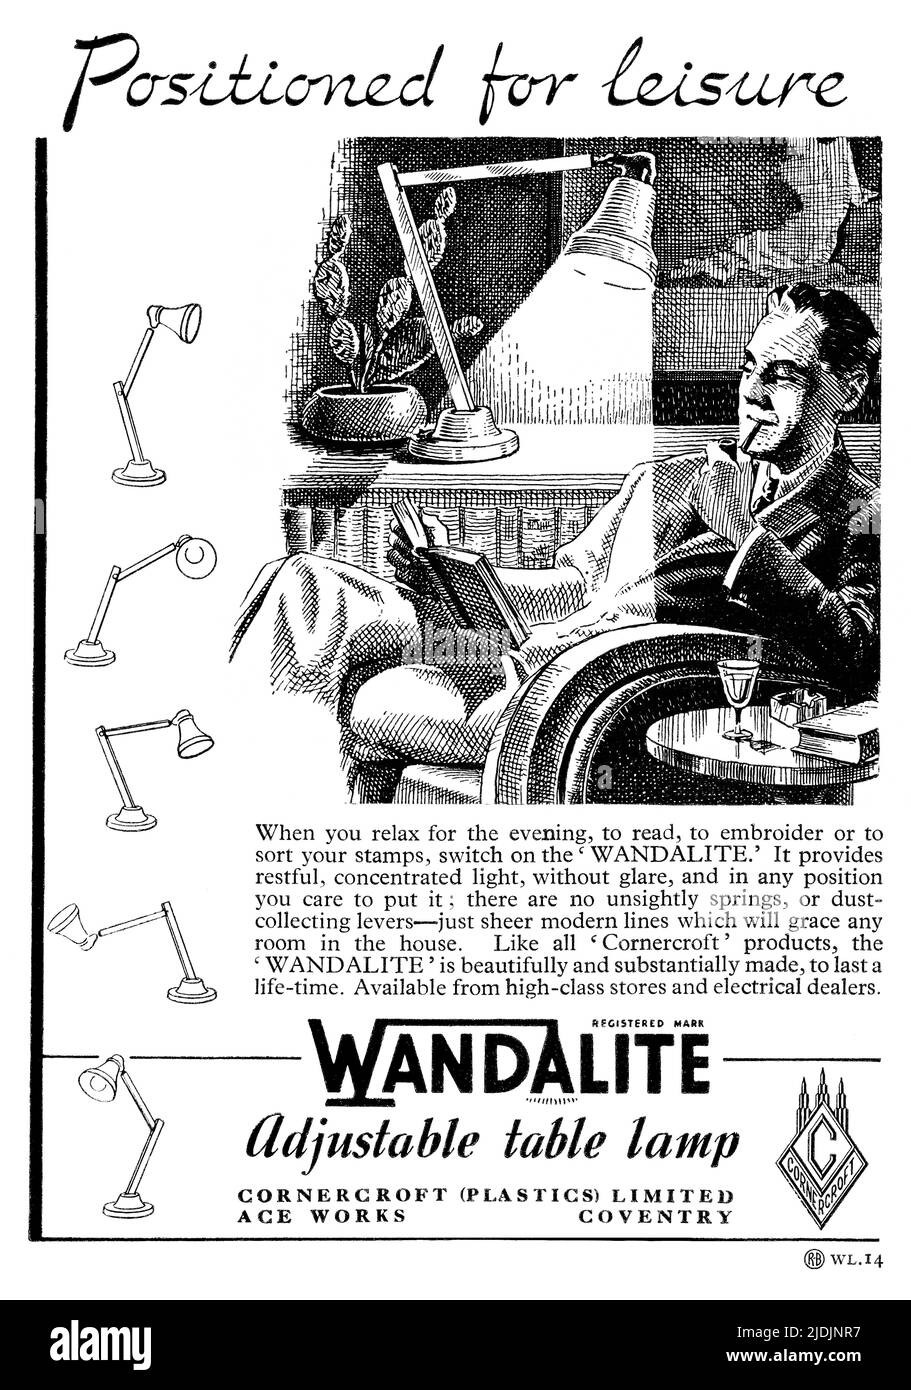 1947 British advertisement for Wandalite adjustable table lamp. Stock Photo